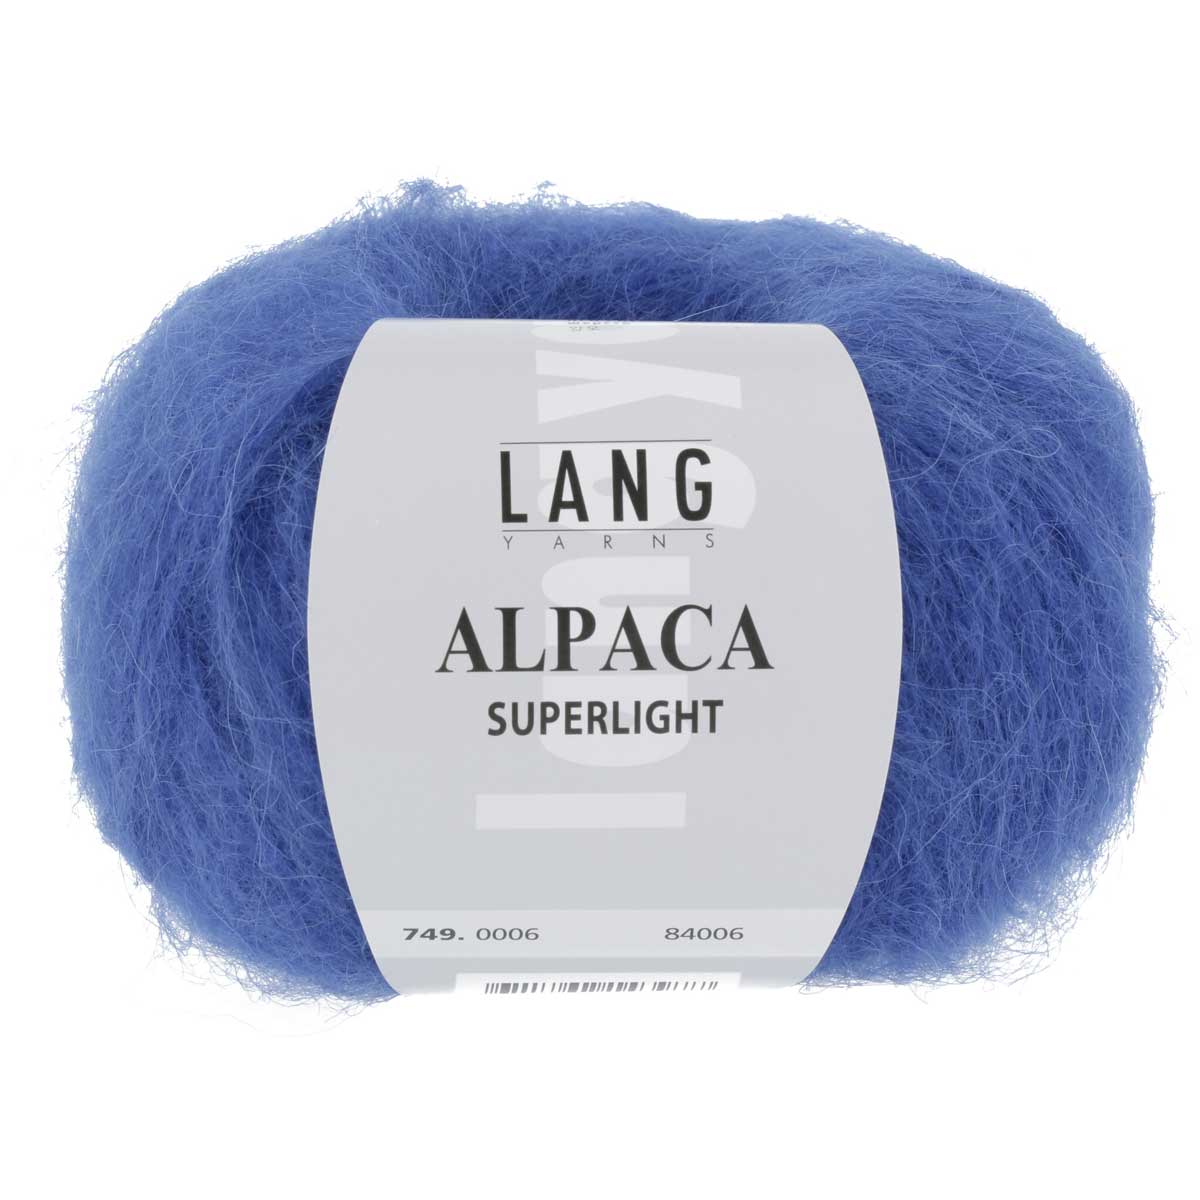 langyarns alpaca superlight